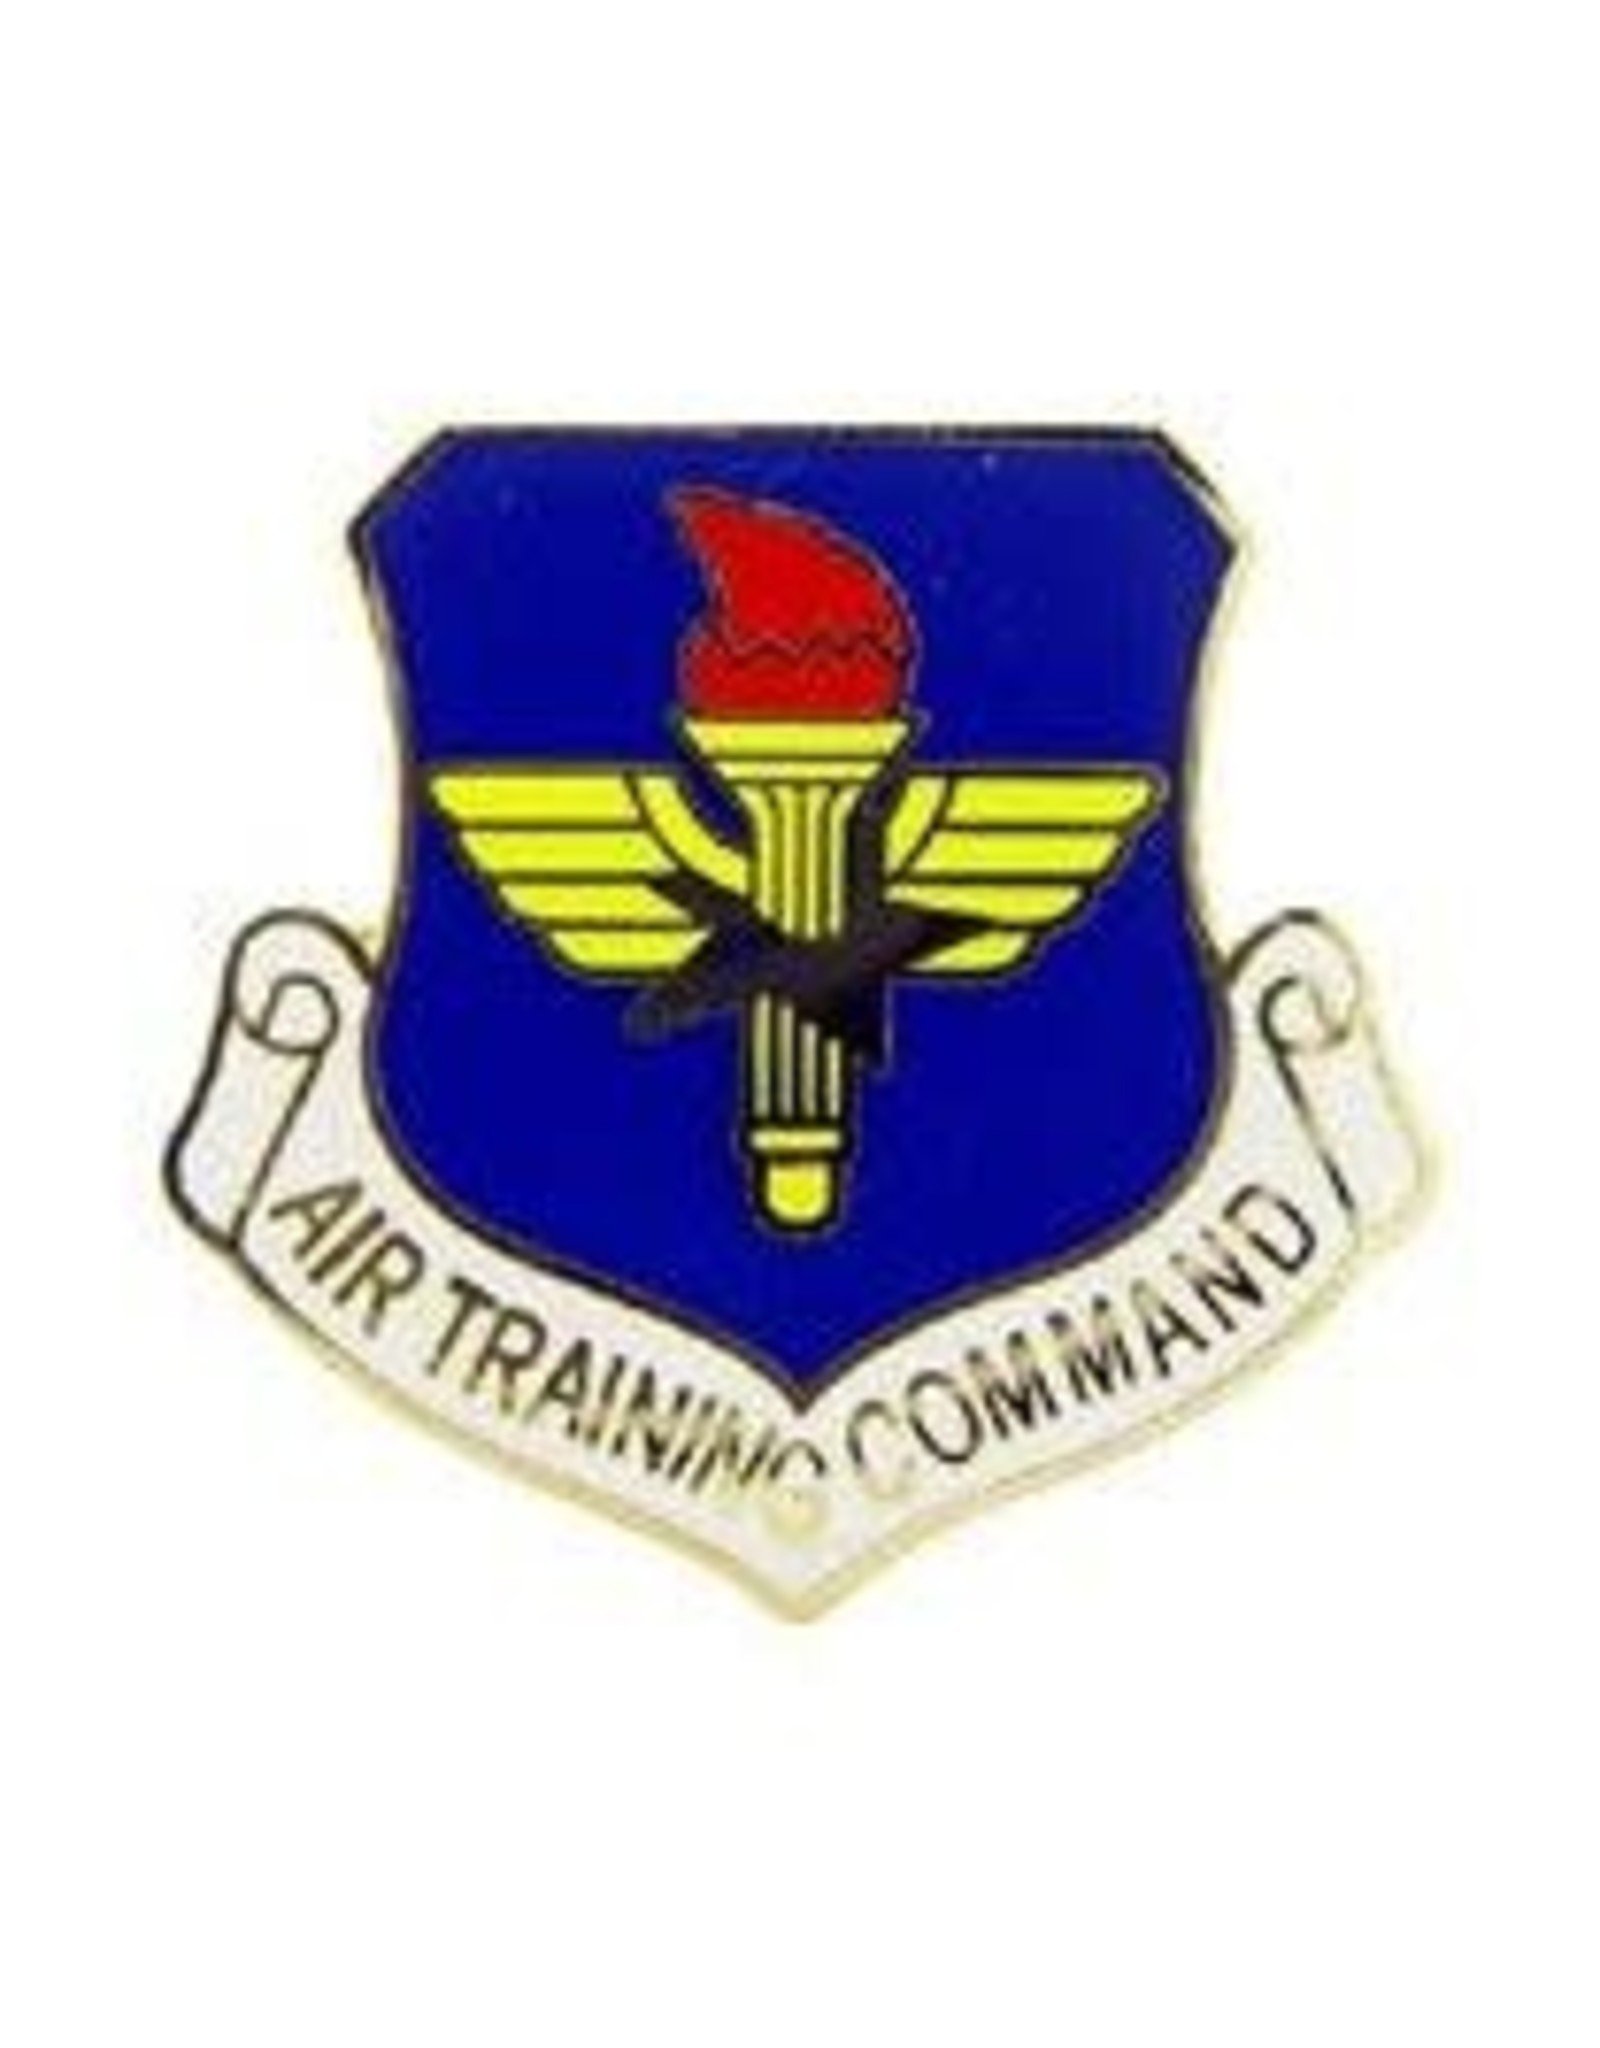 Pin - USAF Training Command